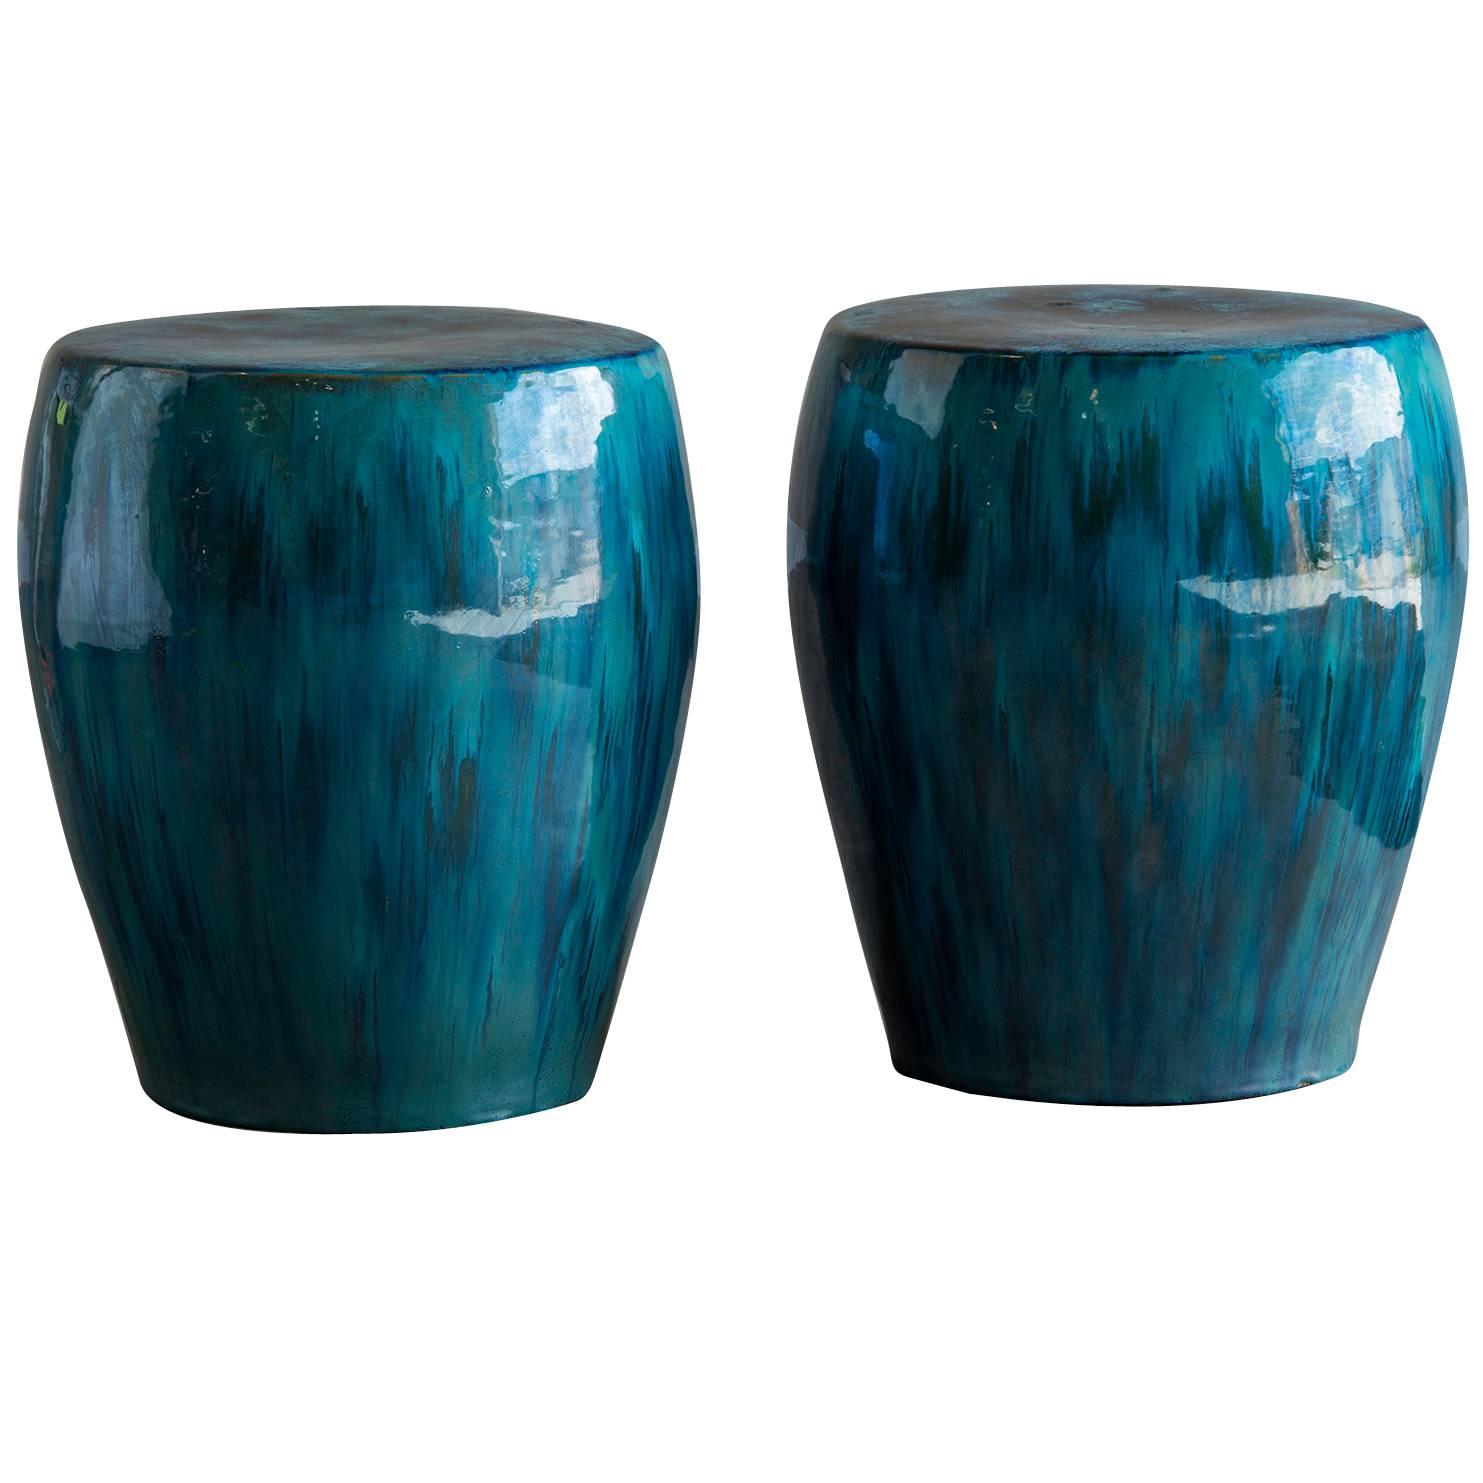 Pair of Blue Glazed Handmade Garden Seats from China